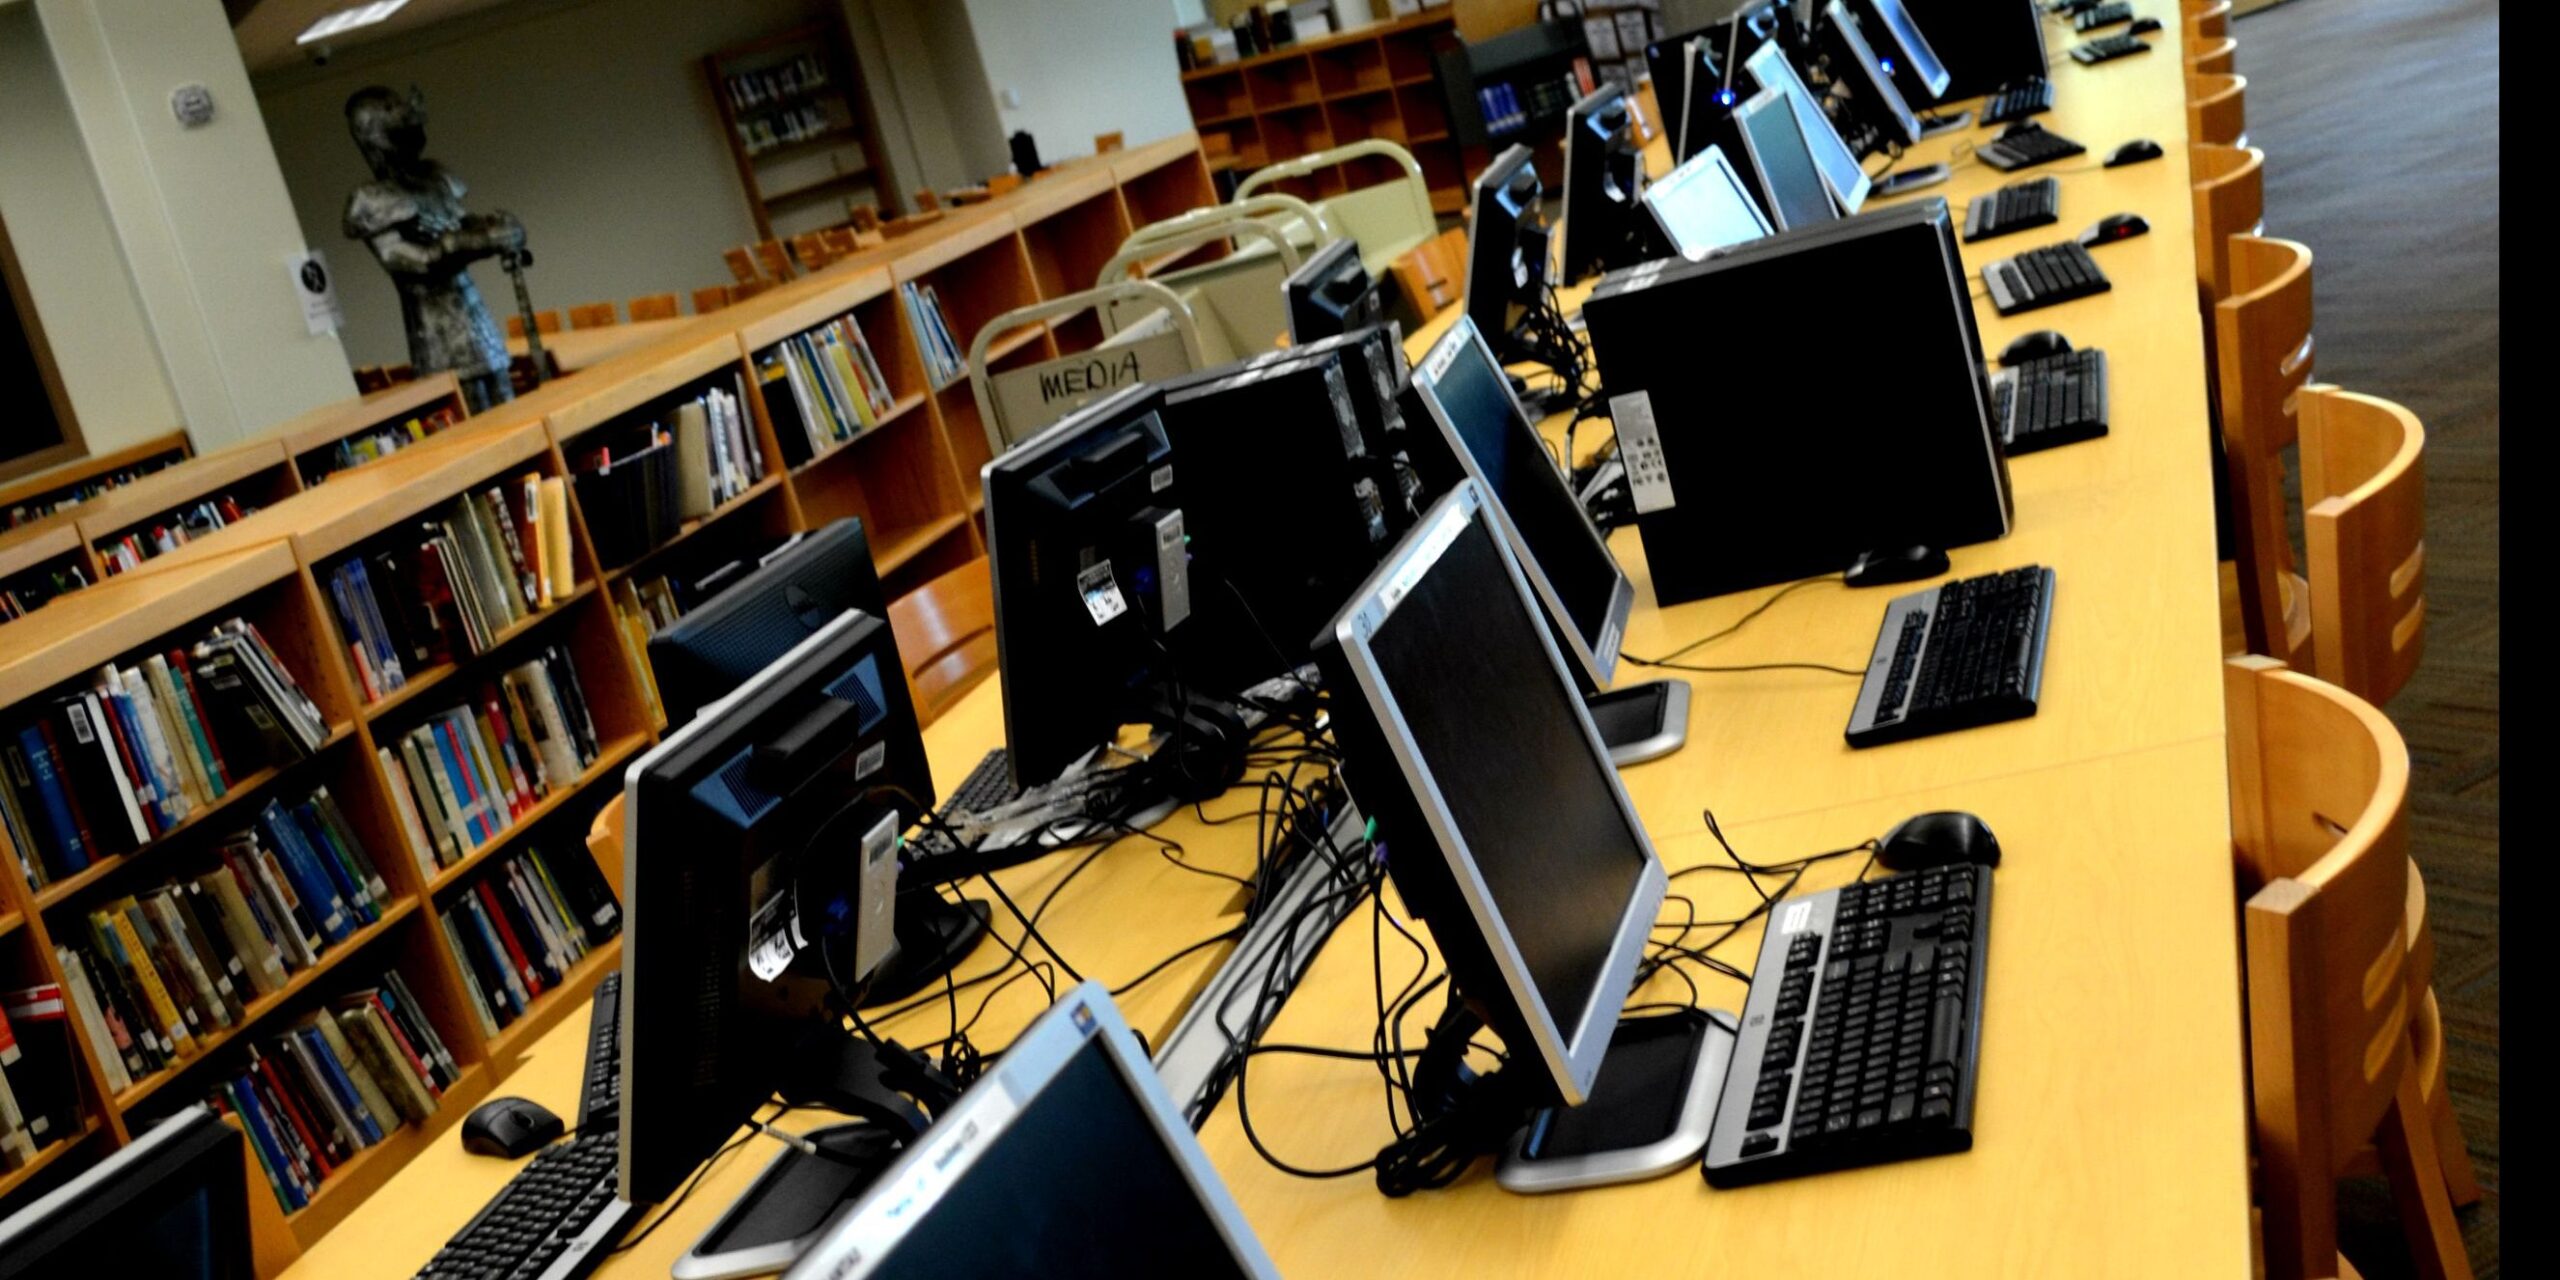 Atlanta schools offer $3K to lure teachers for online class – WABE